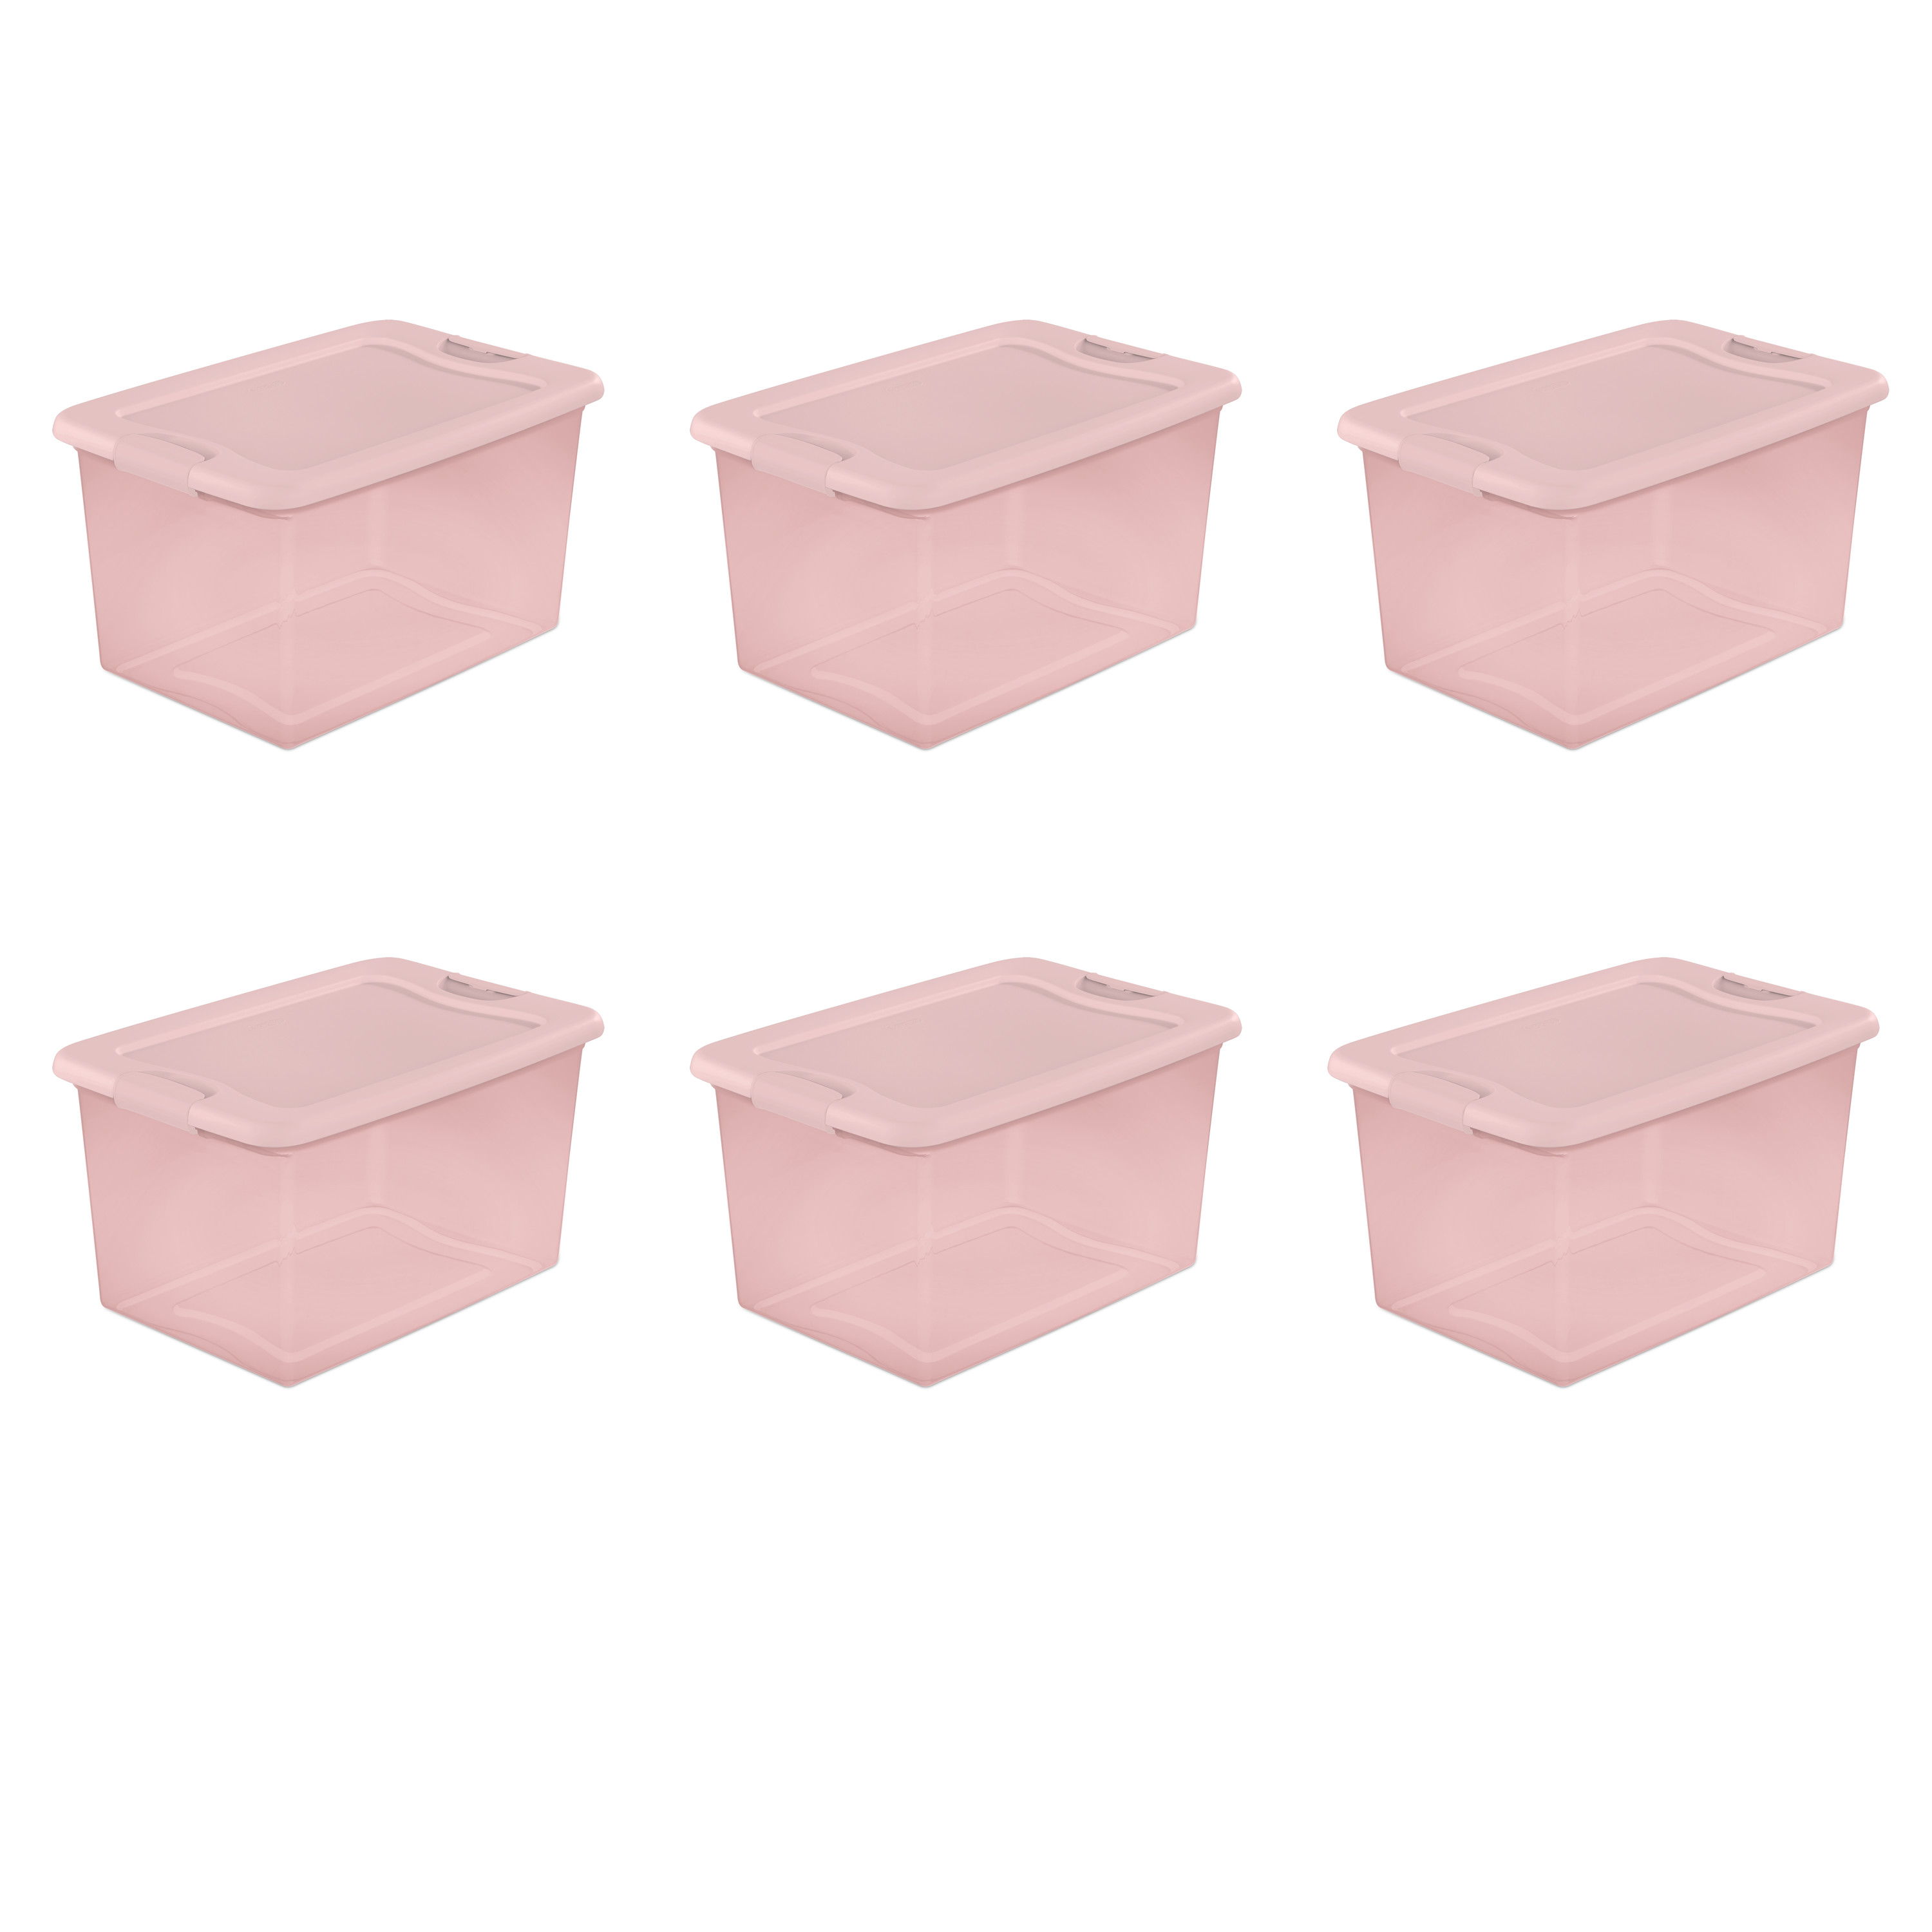 Sterilite 64 Qt. Latching Box Plastic, Blush Pink Tint, Set of 6 - image 1 of 5